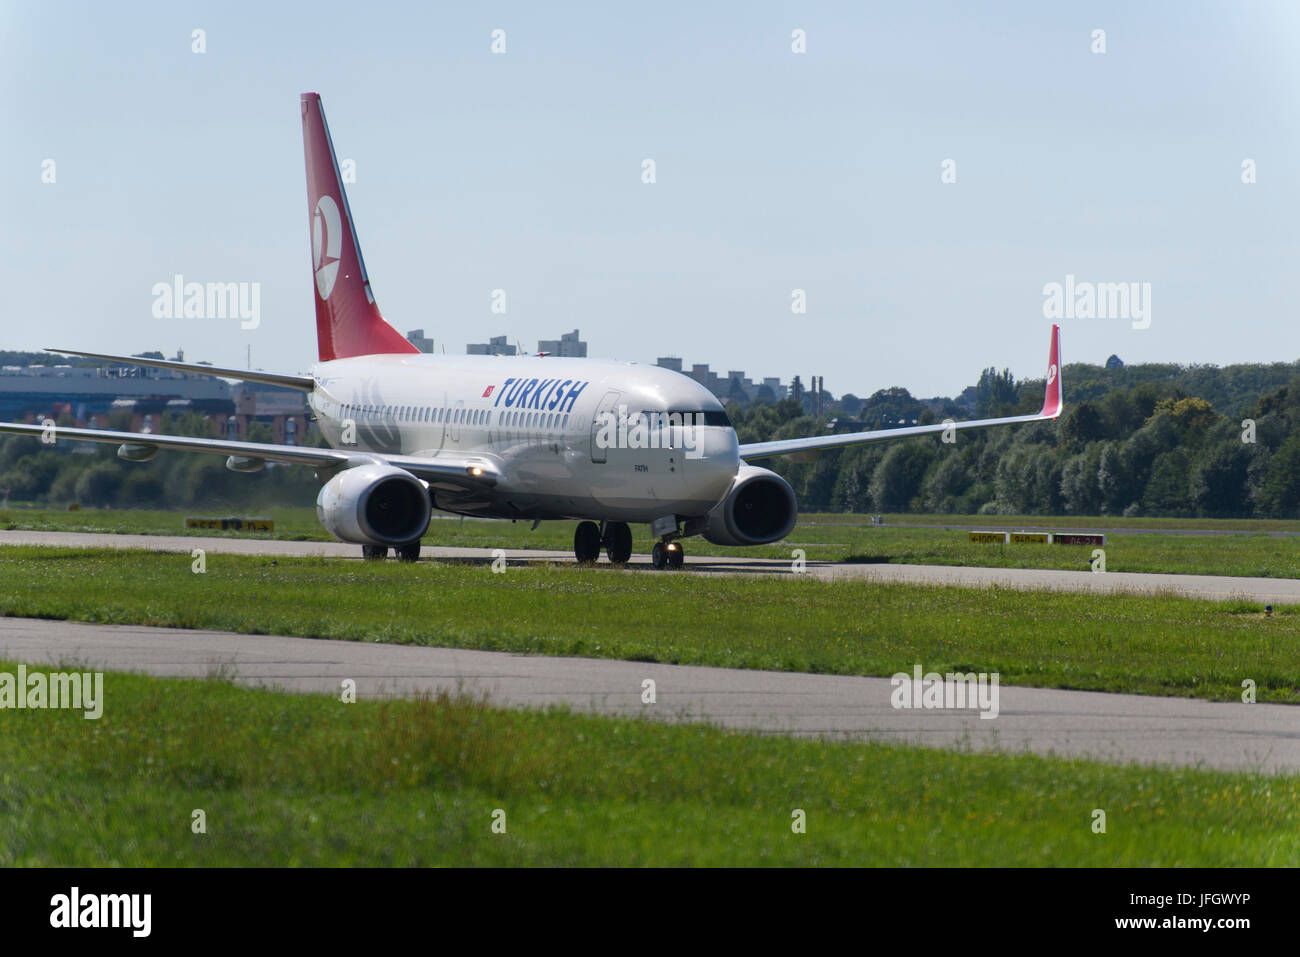 Airport, passenger plane on the runway, Friedrichshafen, Lake of Constance, Baden-Wurttemberg, Germany Stock Photo